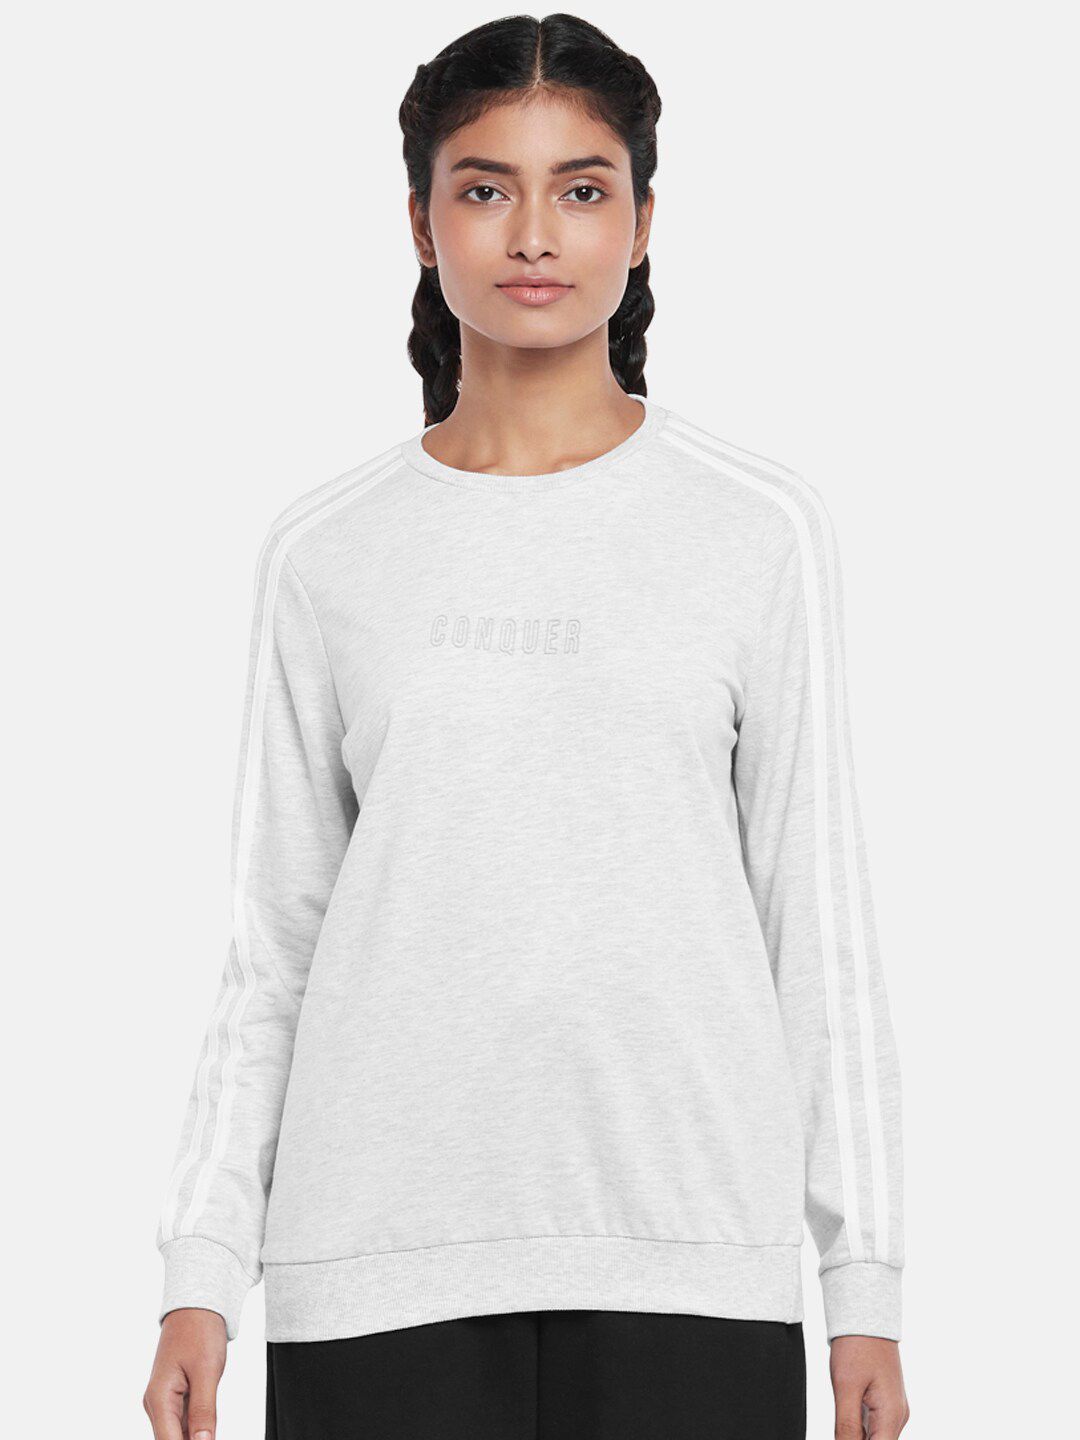 Ajile by Pantaloons Women Grey Melange Sweatshirt Price in India